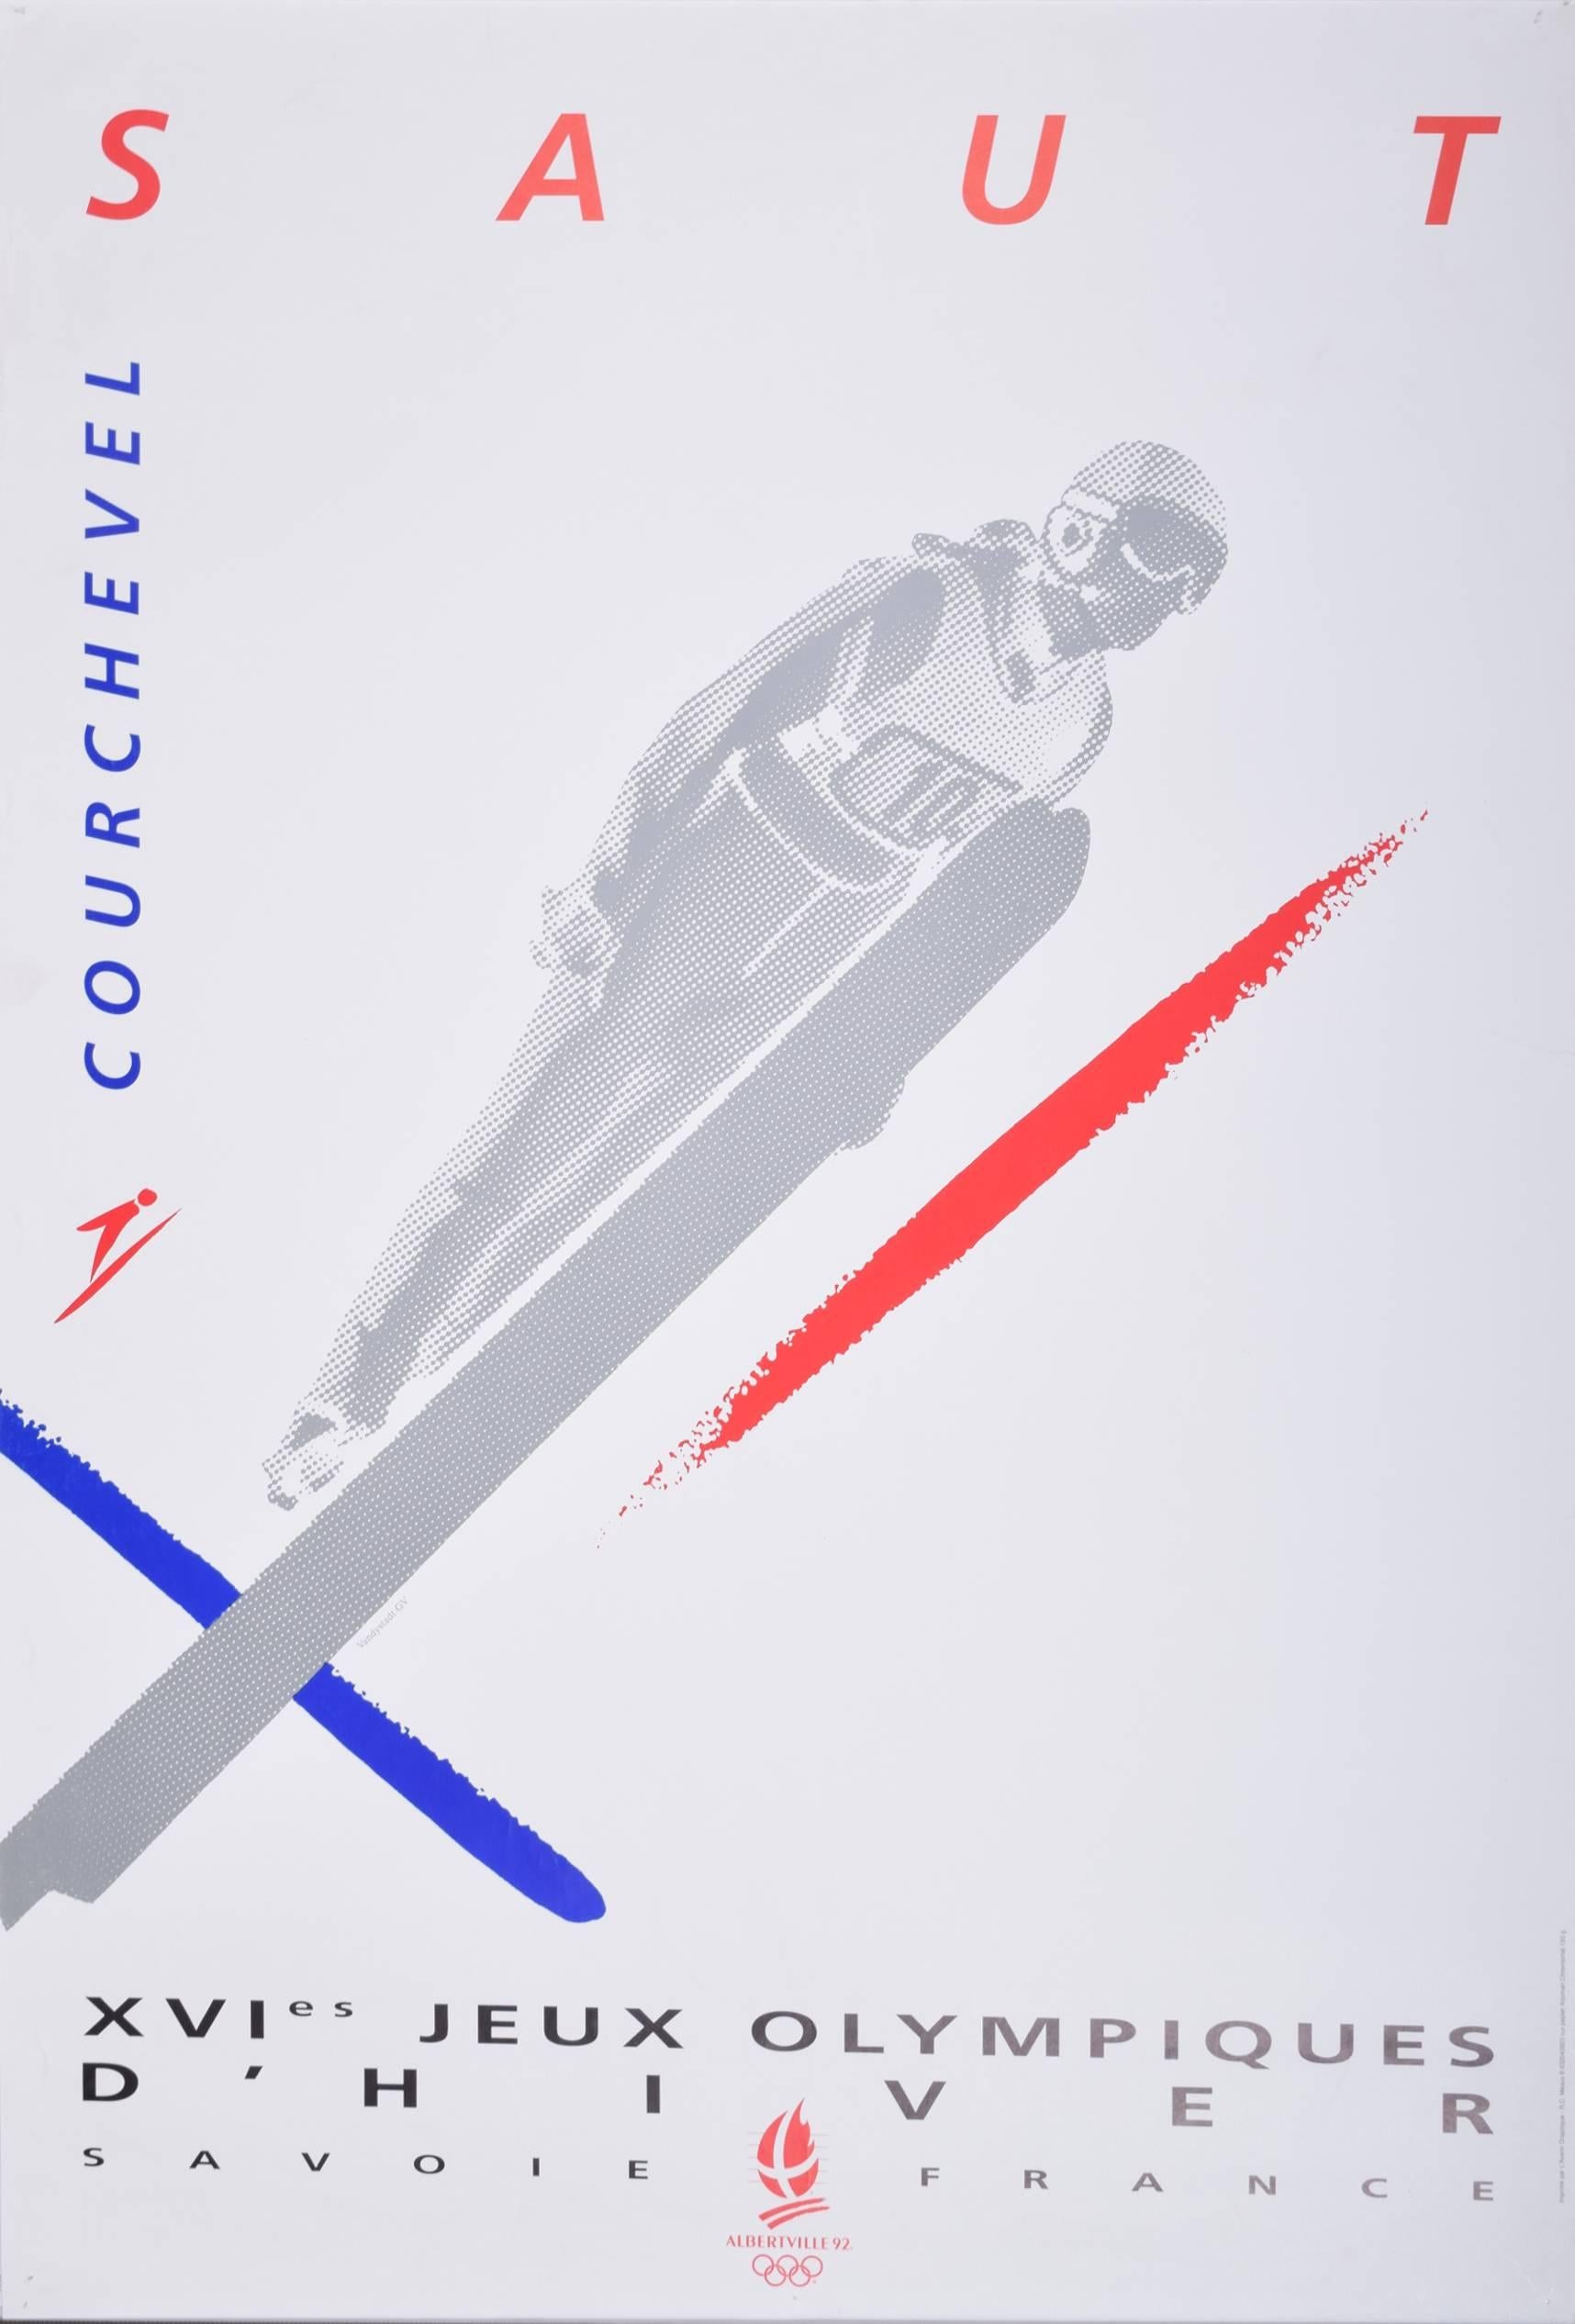 Unknown Print - Courchevel 16th Winter Olympics poster Albertville France 1992: Saut - Ski Jump